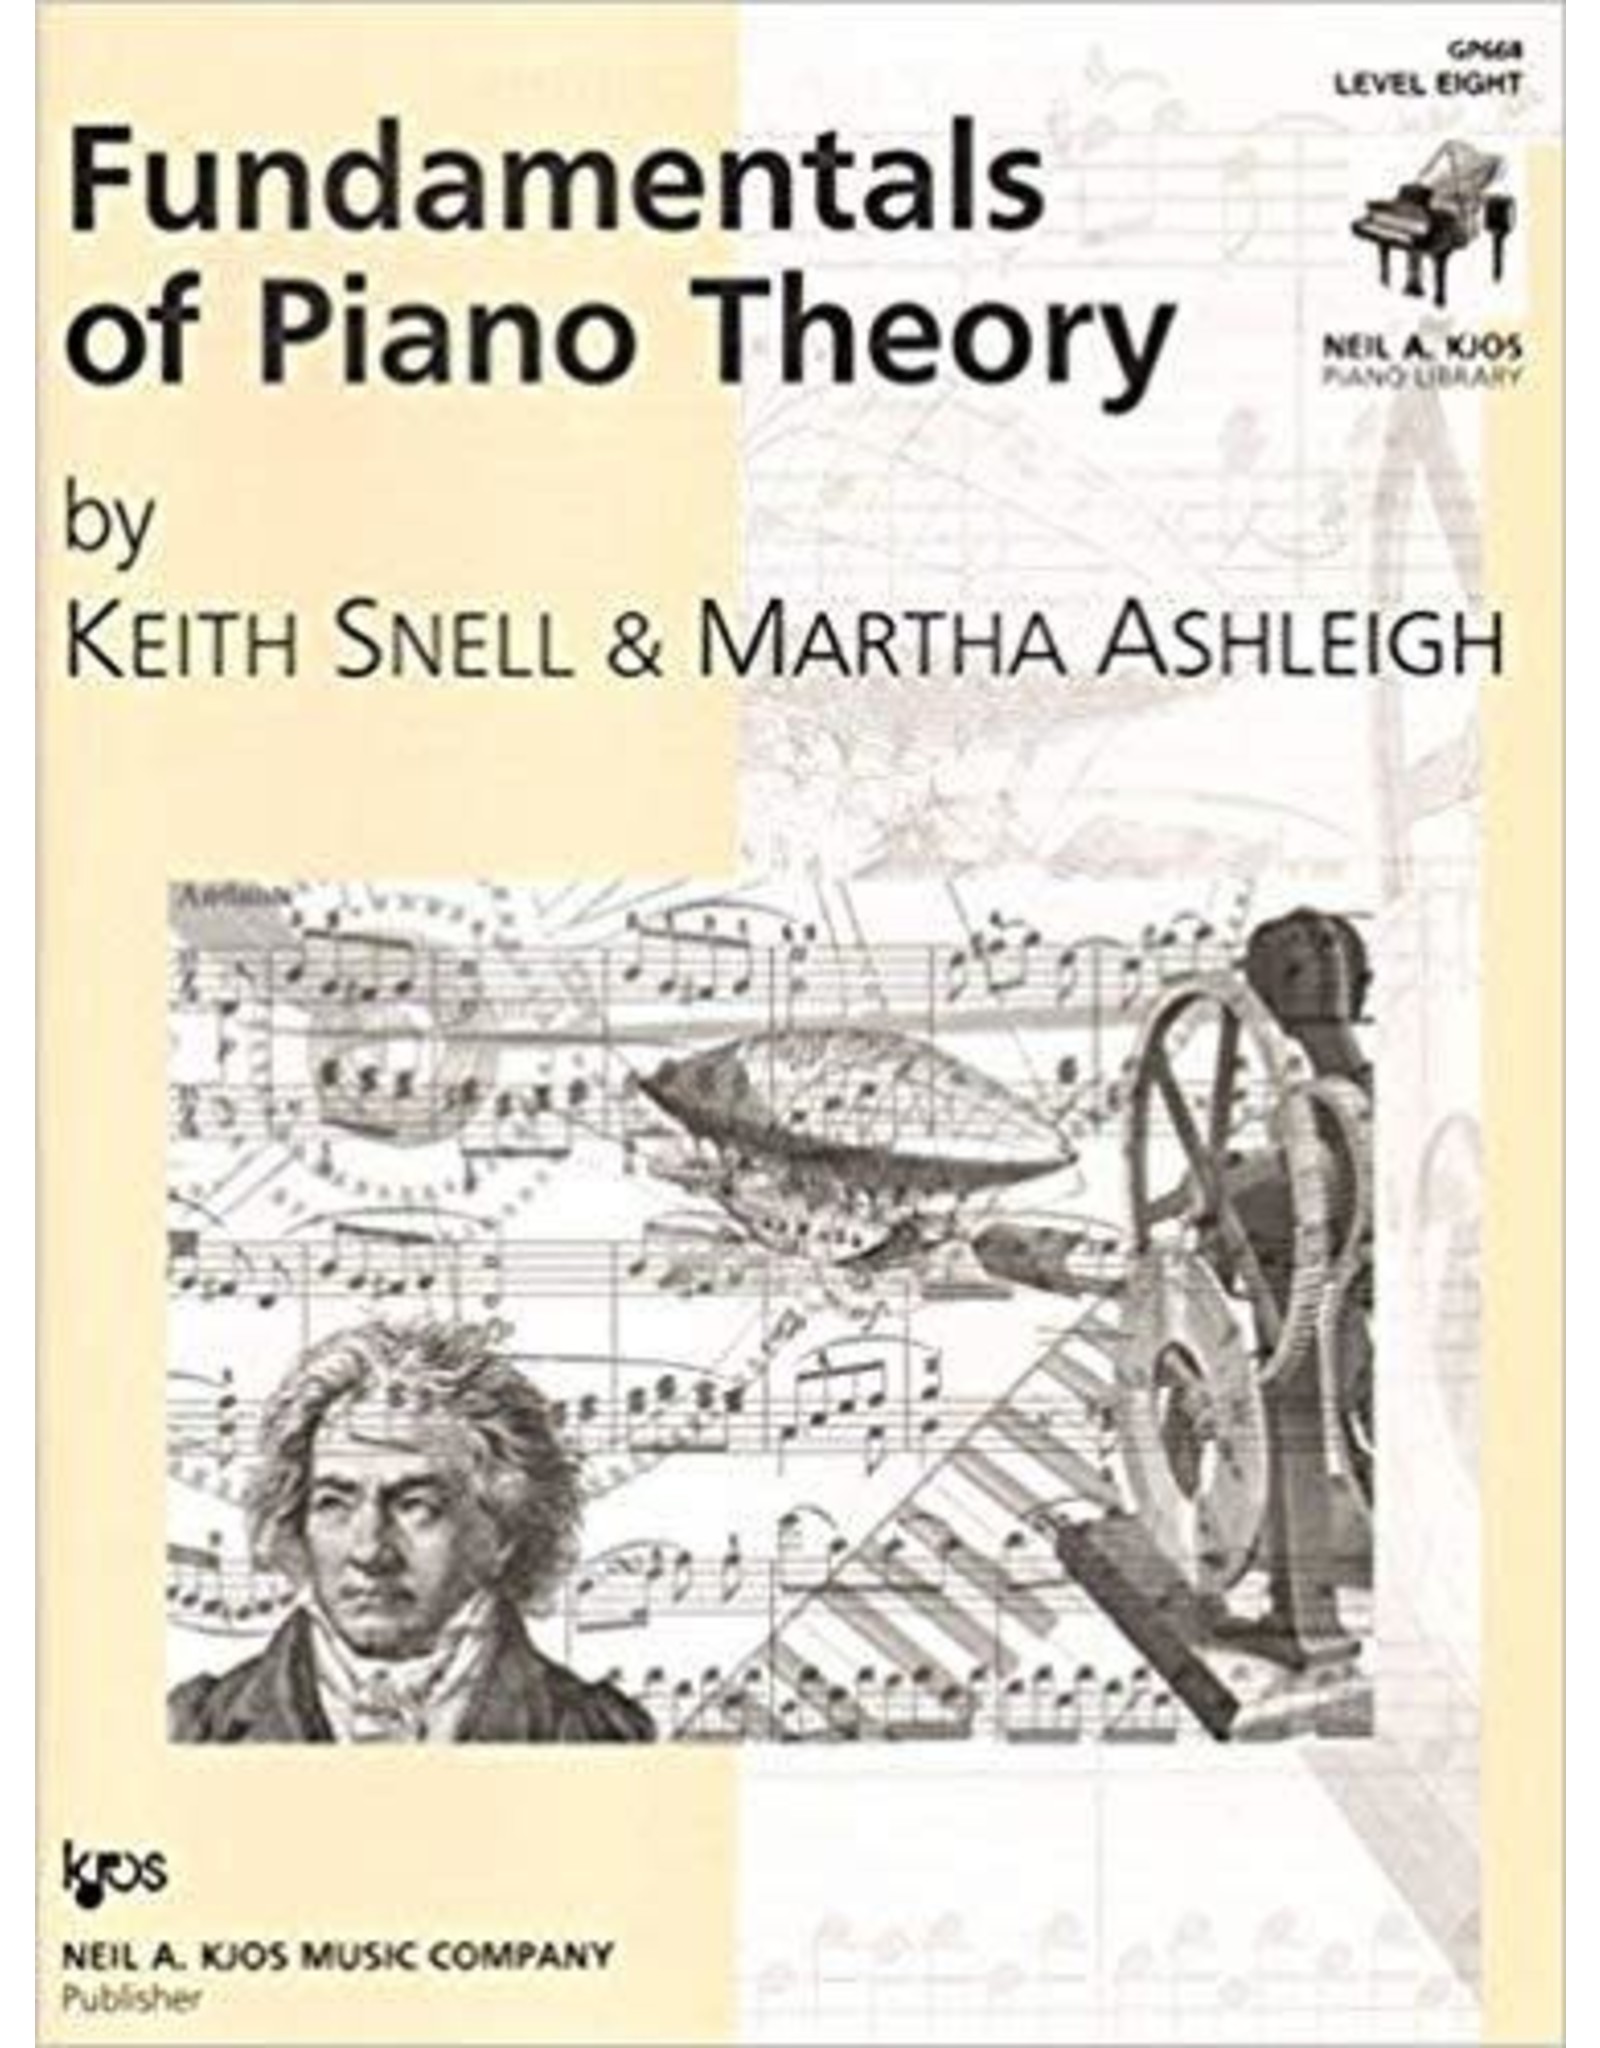 Kjos Fundamentals of Piano Theory, Level 8 Keith Snell